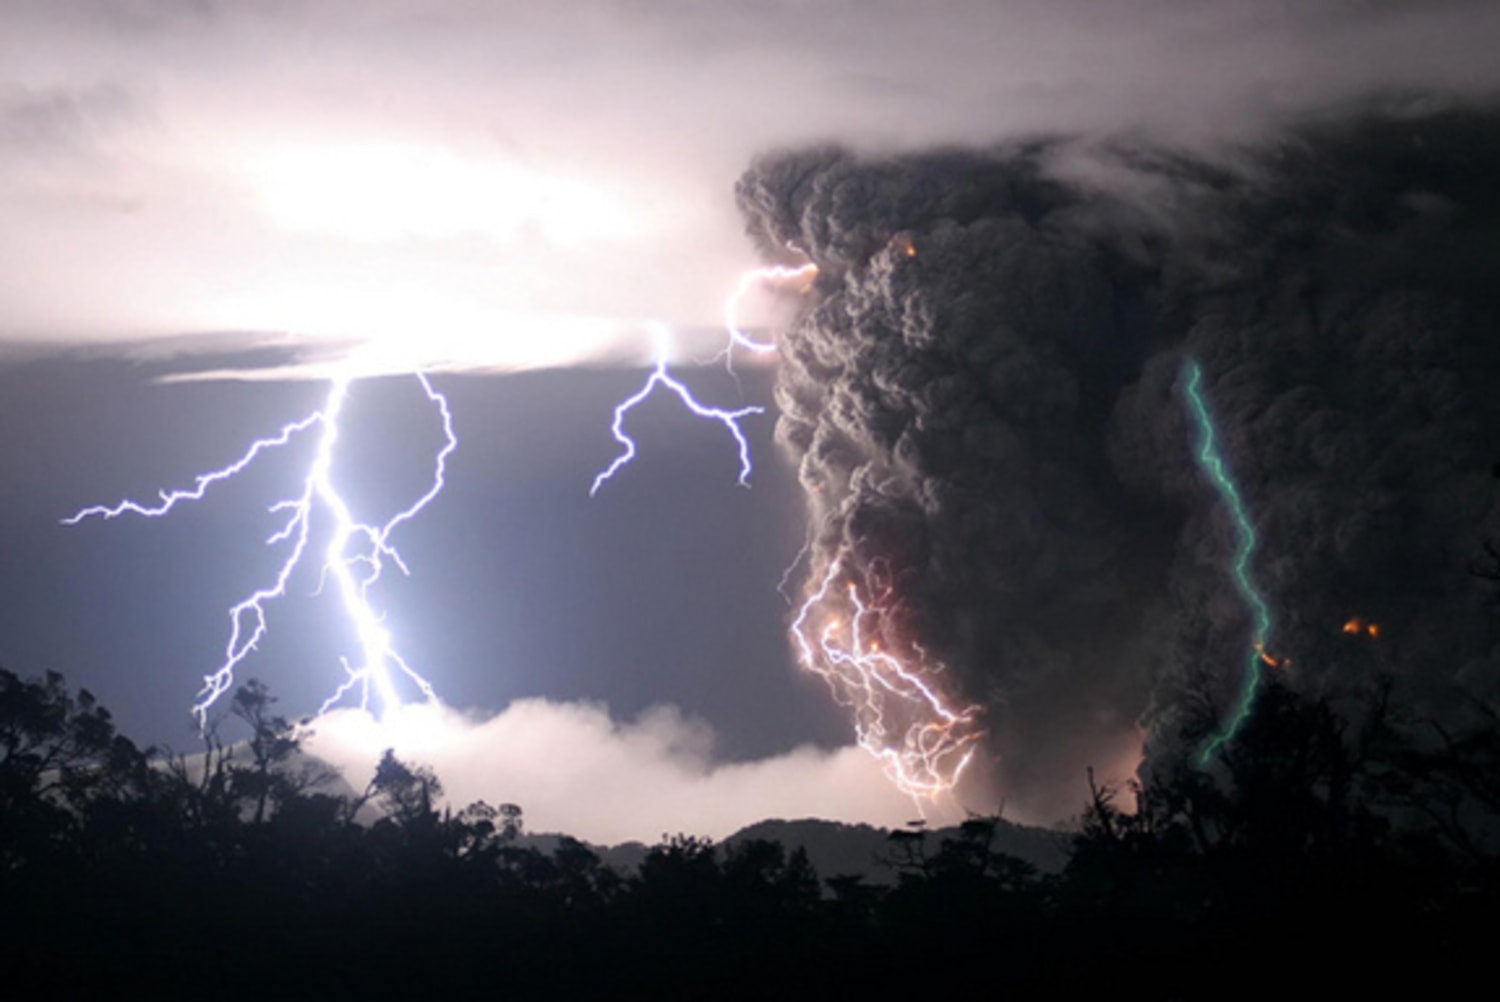 How eerie green lightning zapped an erupting volcano